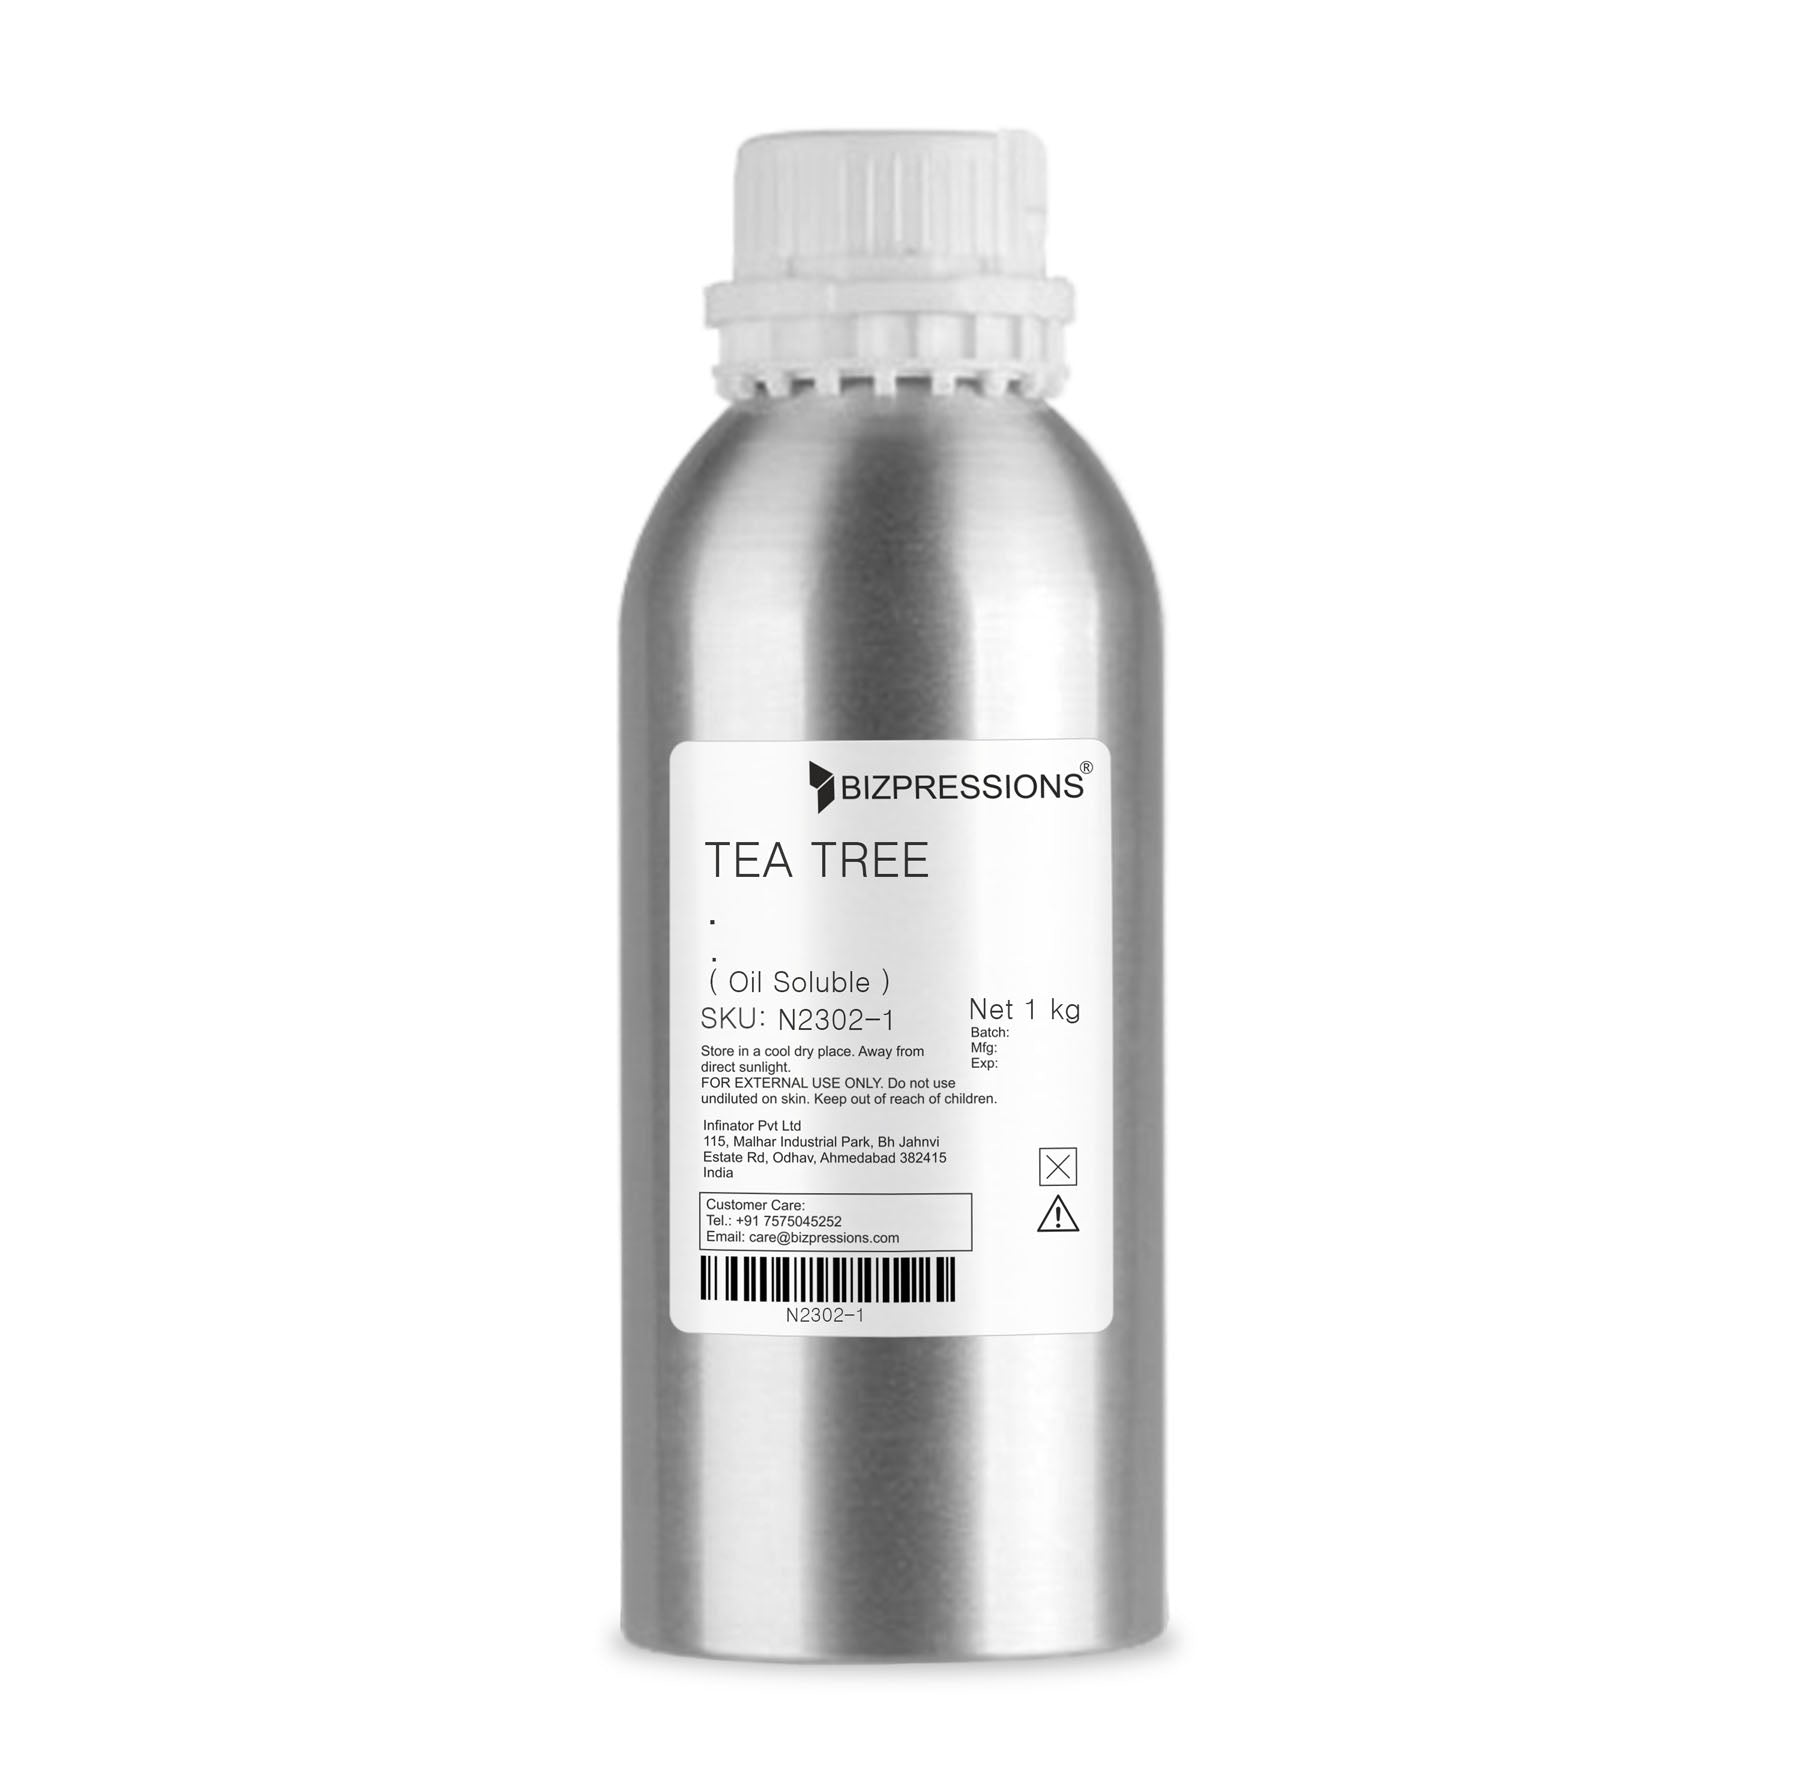 TEA TREE - Fragrance ( Oil Soluble ) - 1 kg